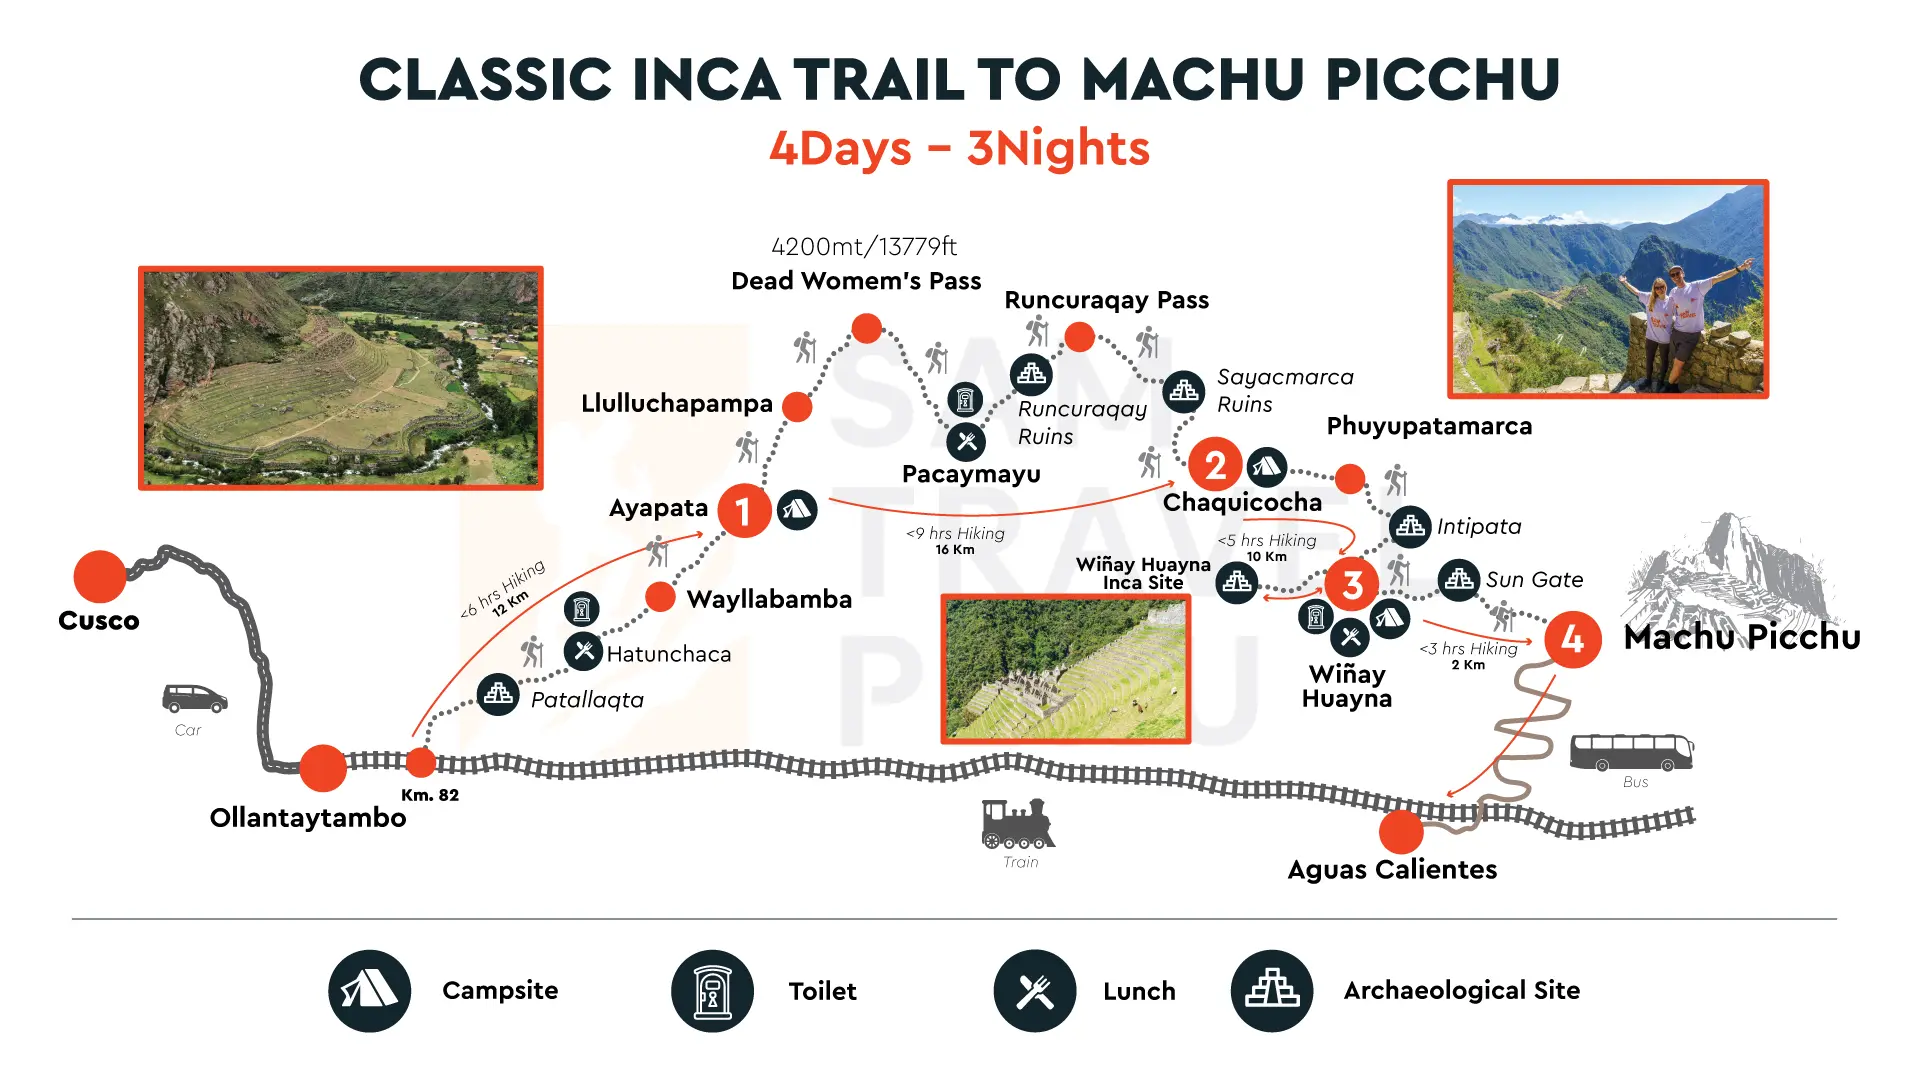 Inca Trail and Manu  8 days - Palotoa  Travel